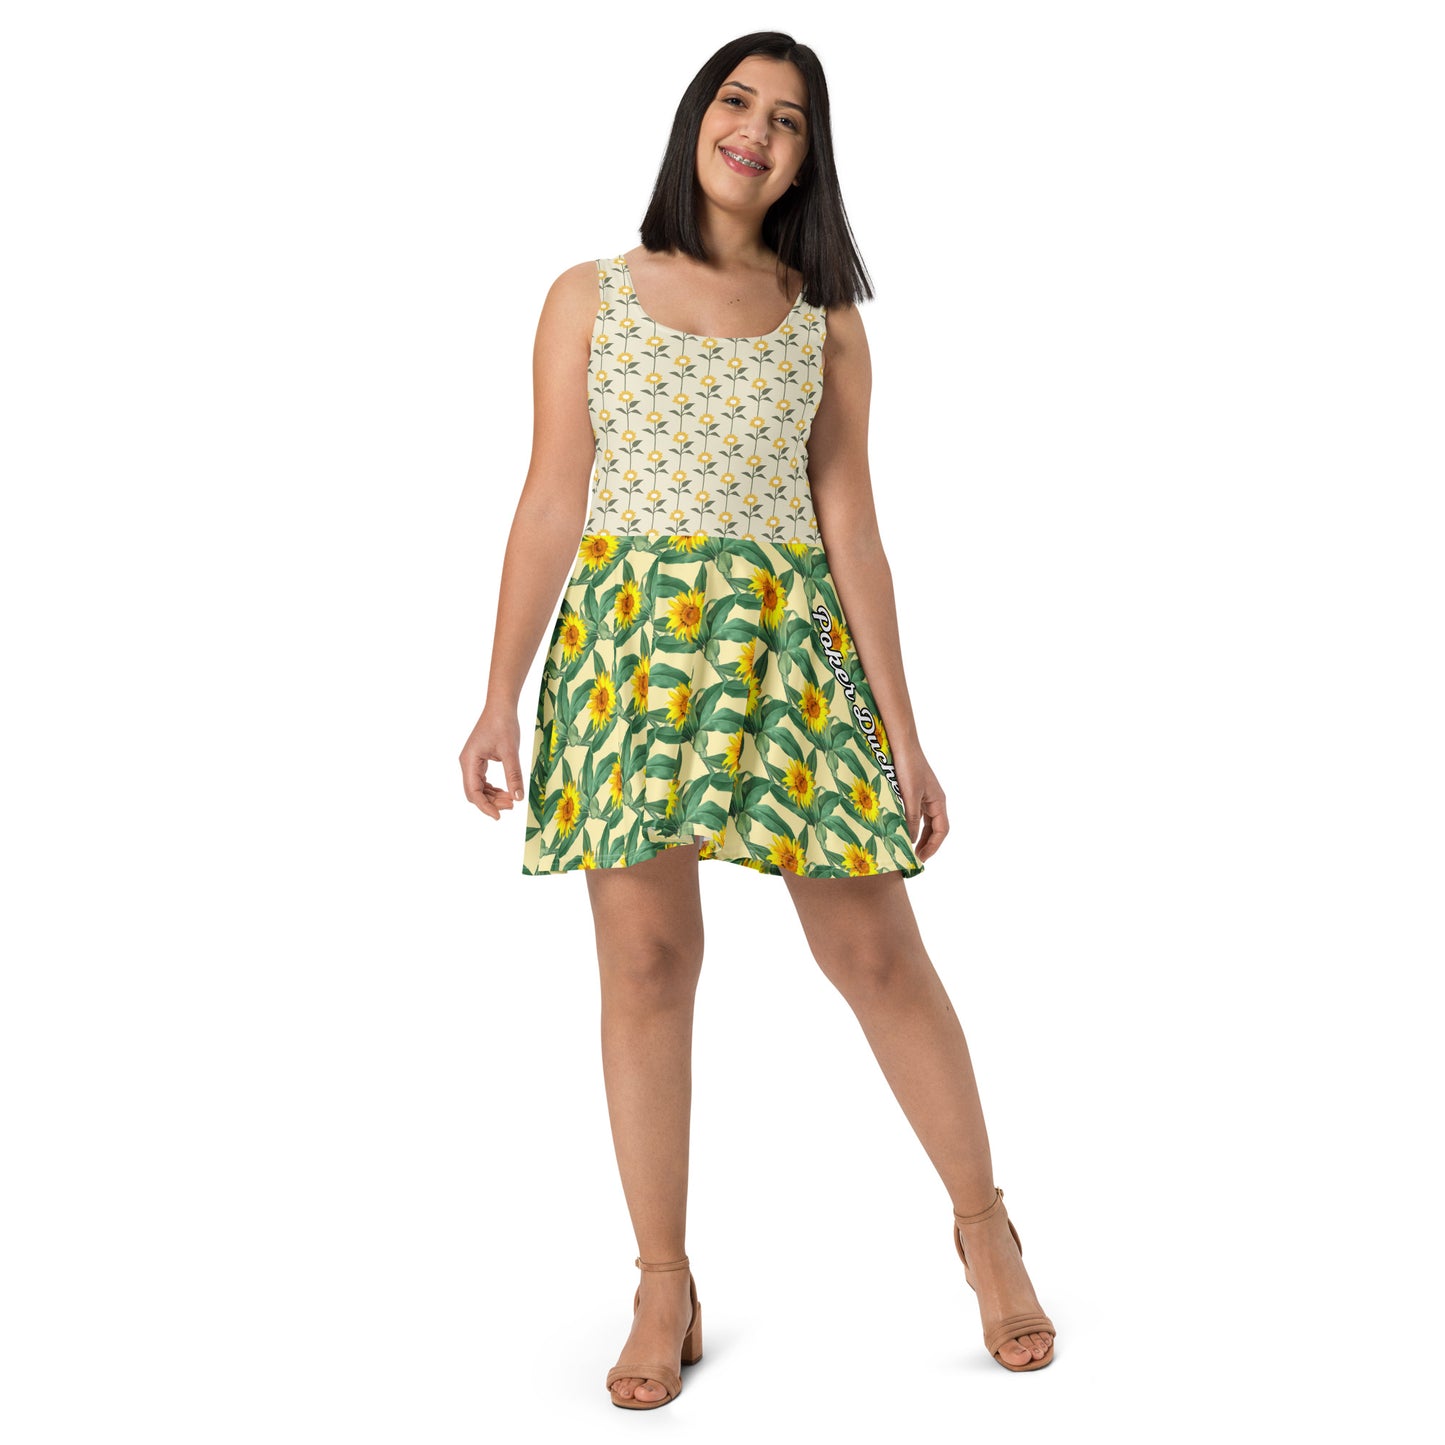 Club2 promo Duchess Sunflower Dress